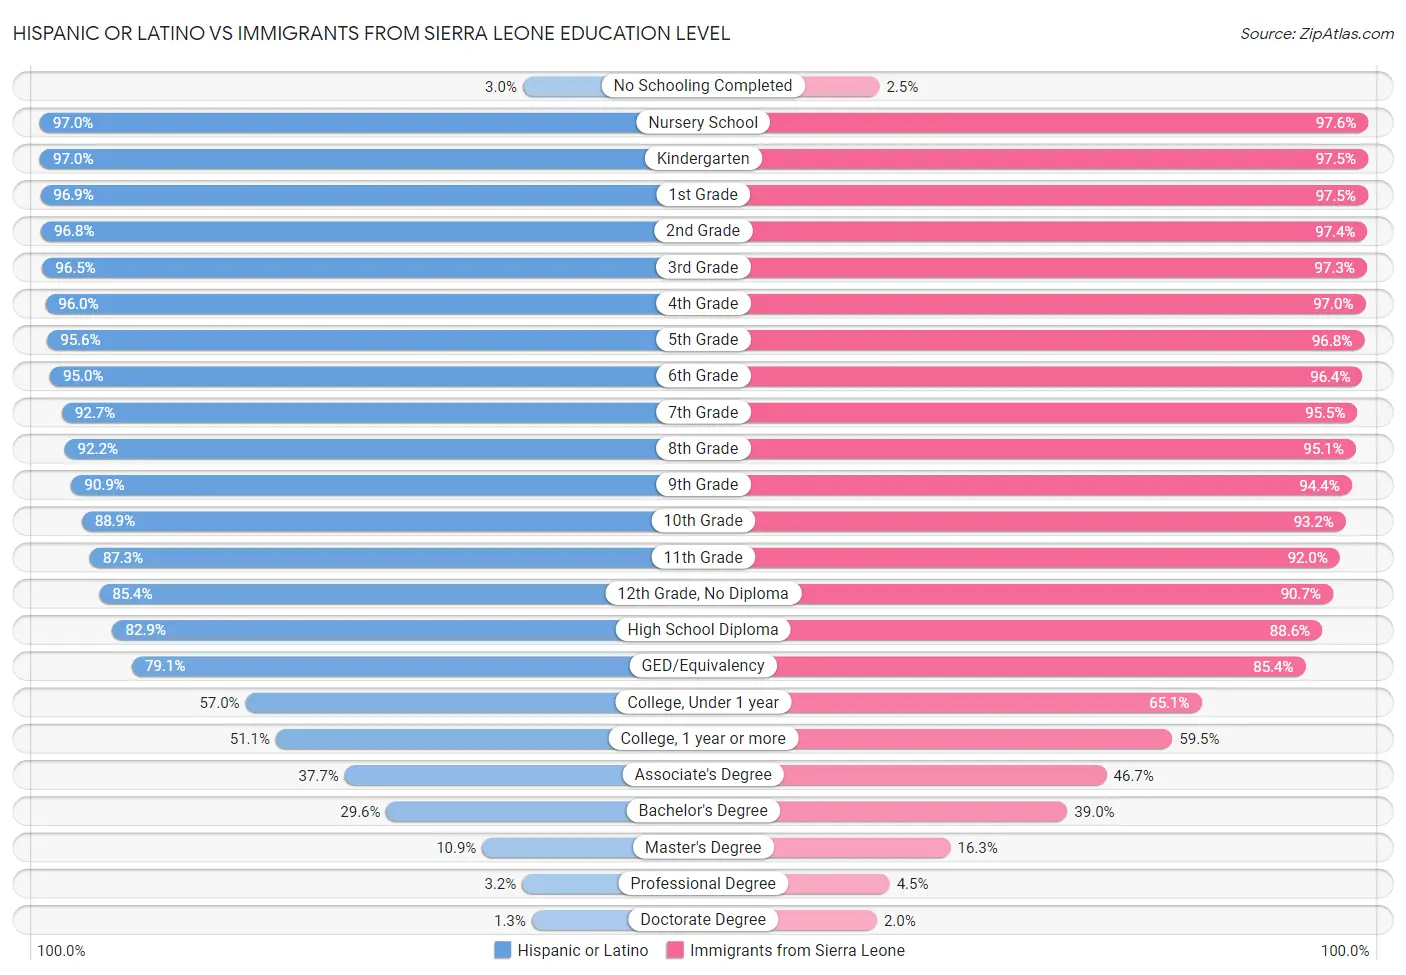 Hispanic or Latino vs Immigrants from Sierra Leone Education Level